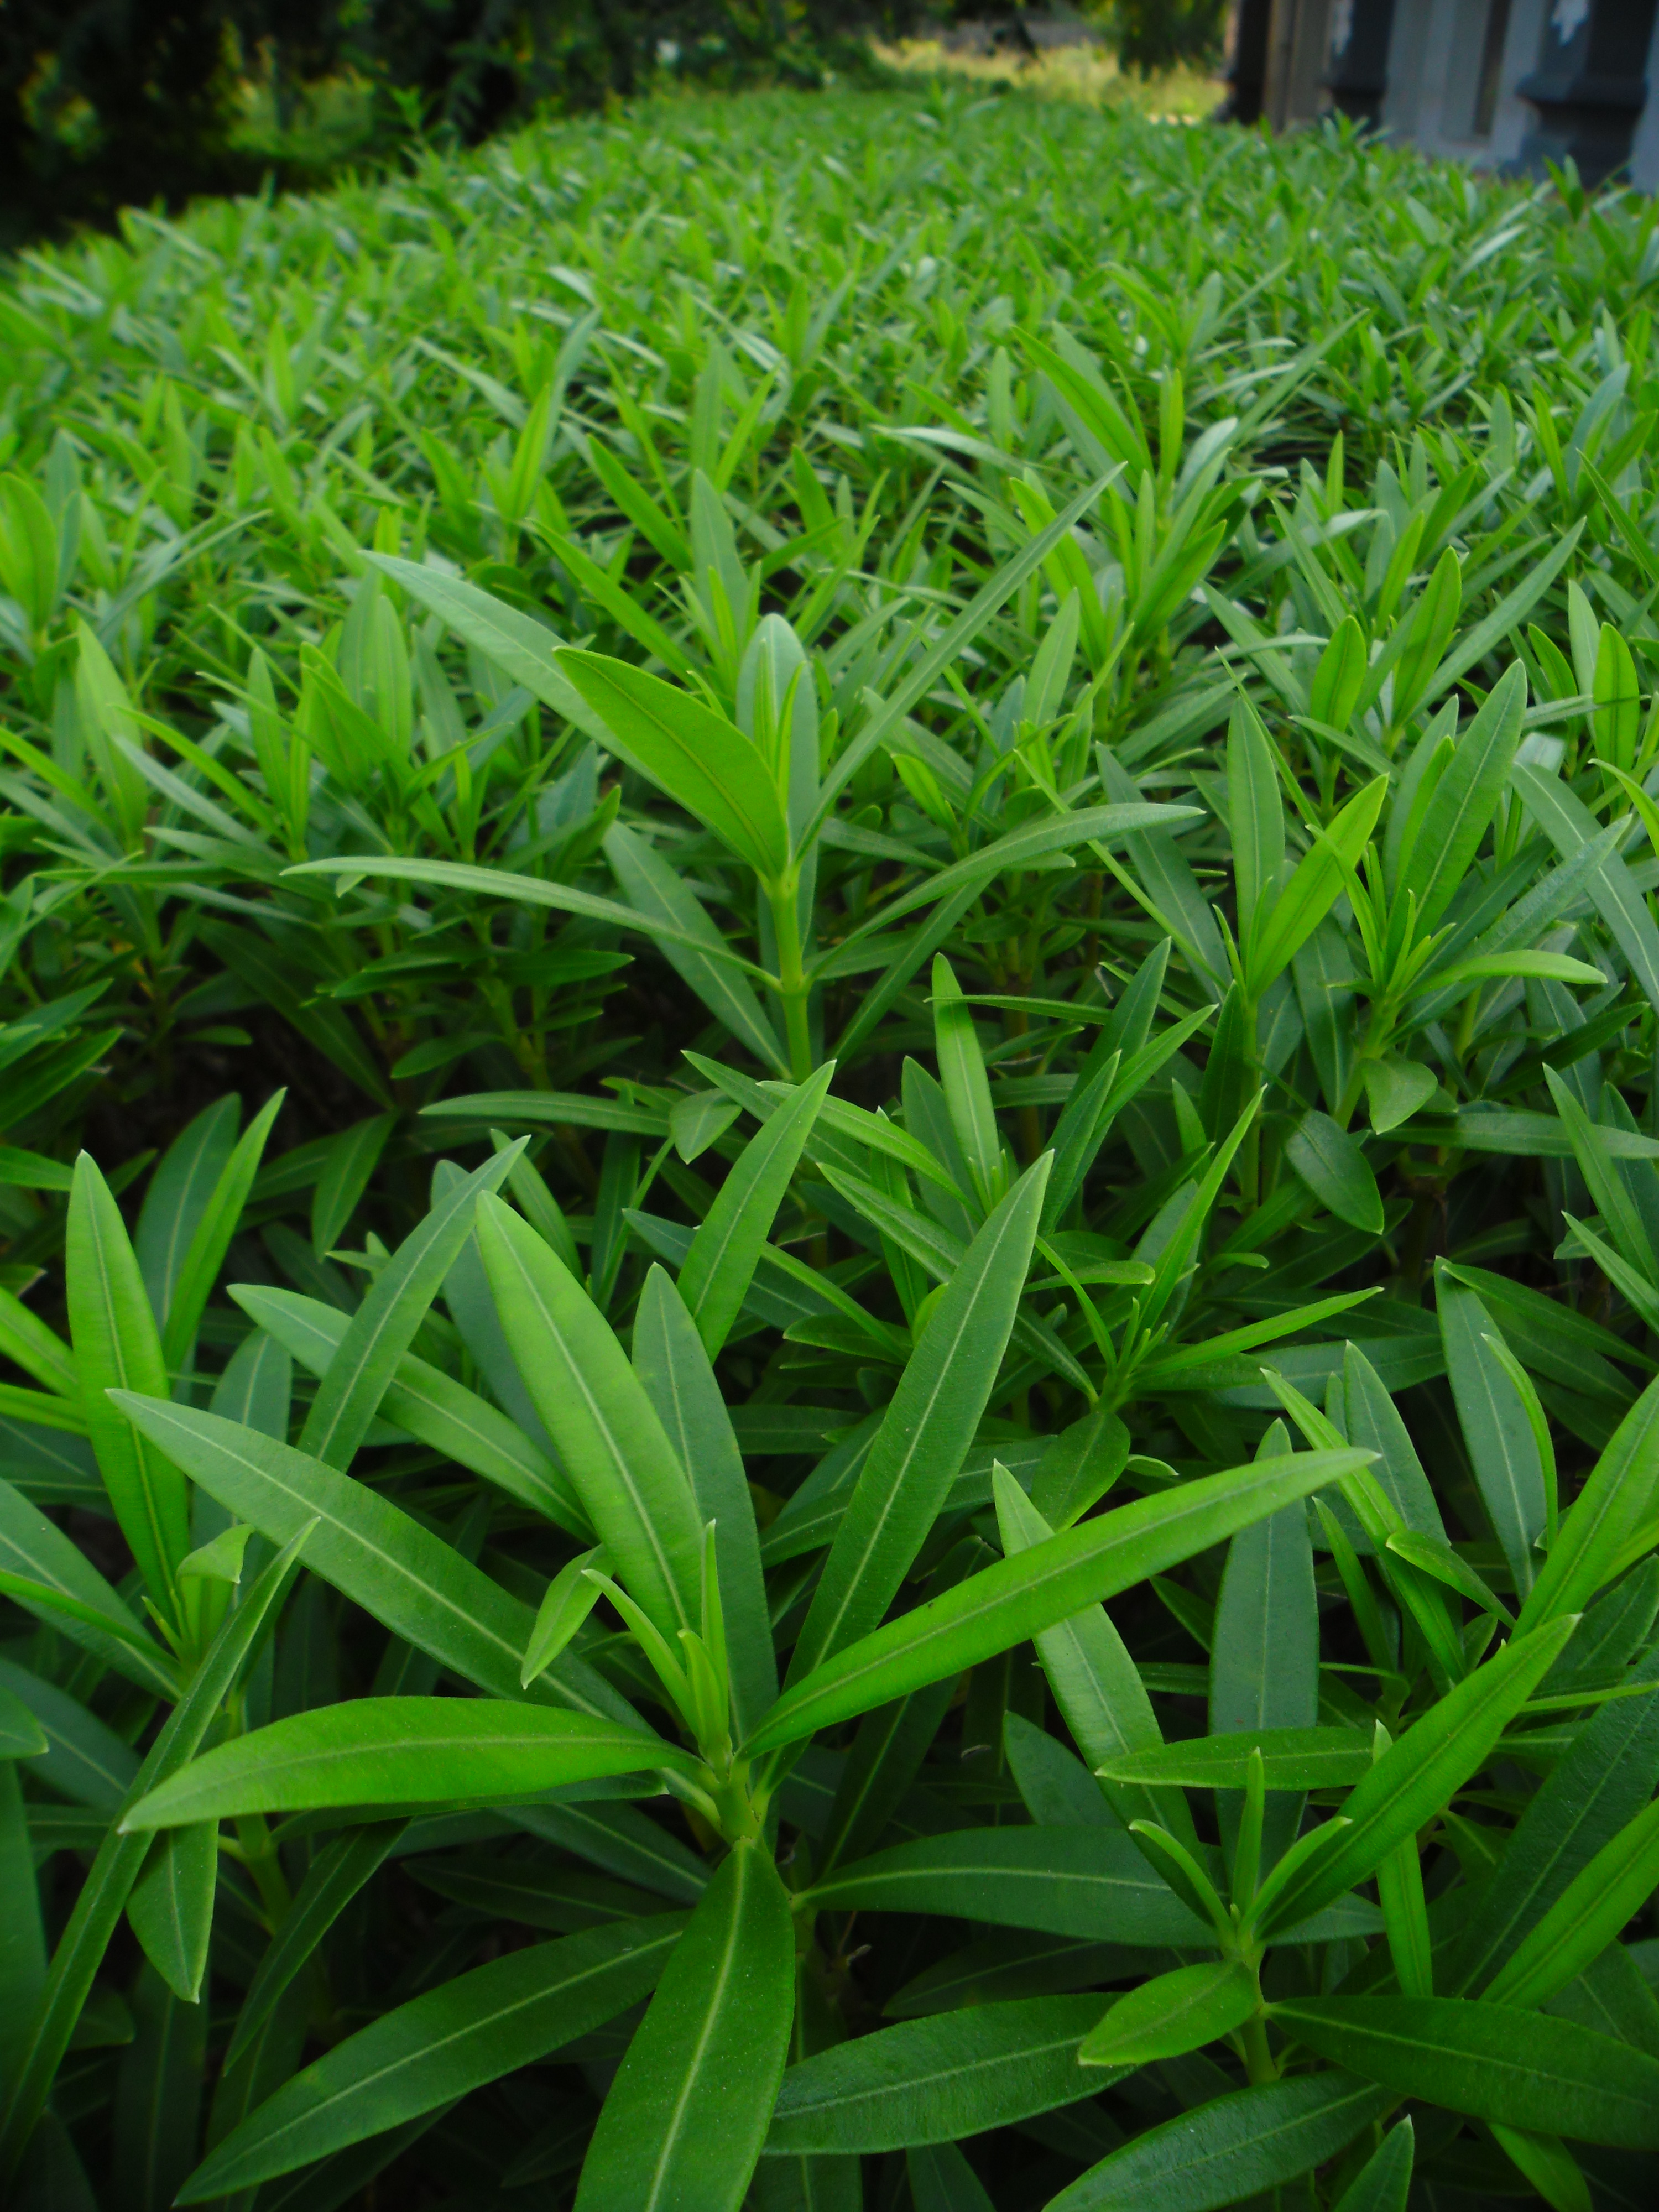 File:Green plants in garland.JPG - Wikimedia Commons